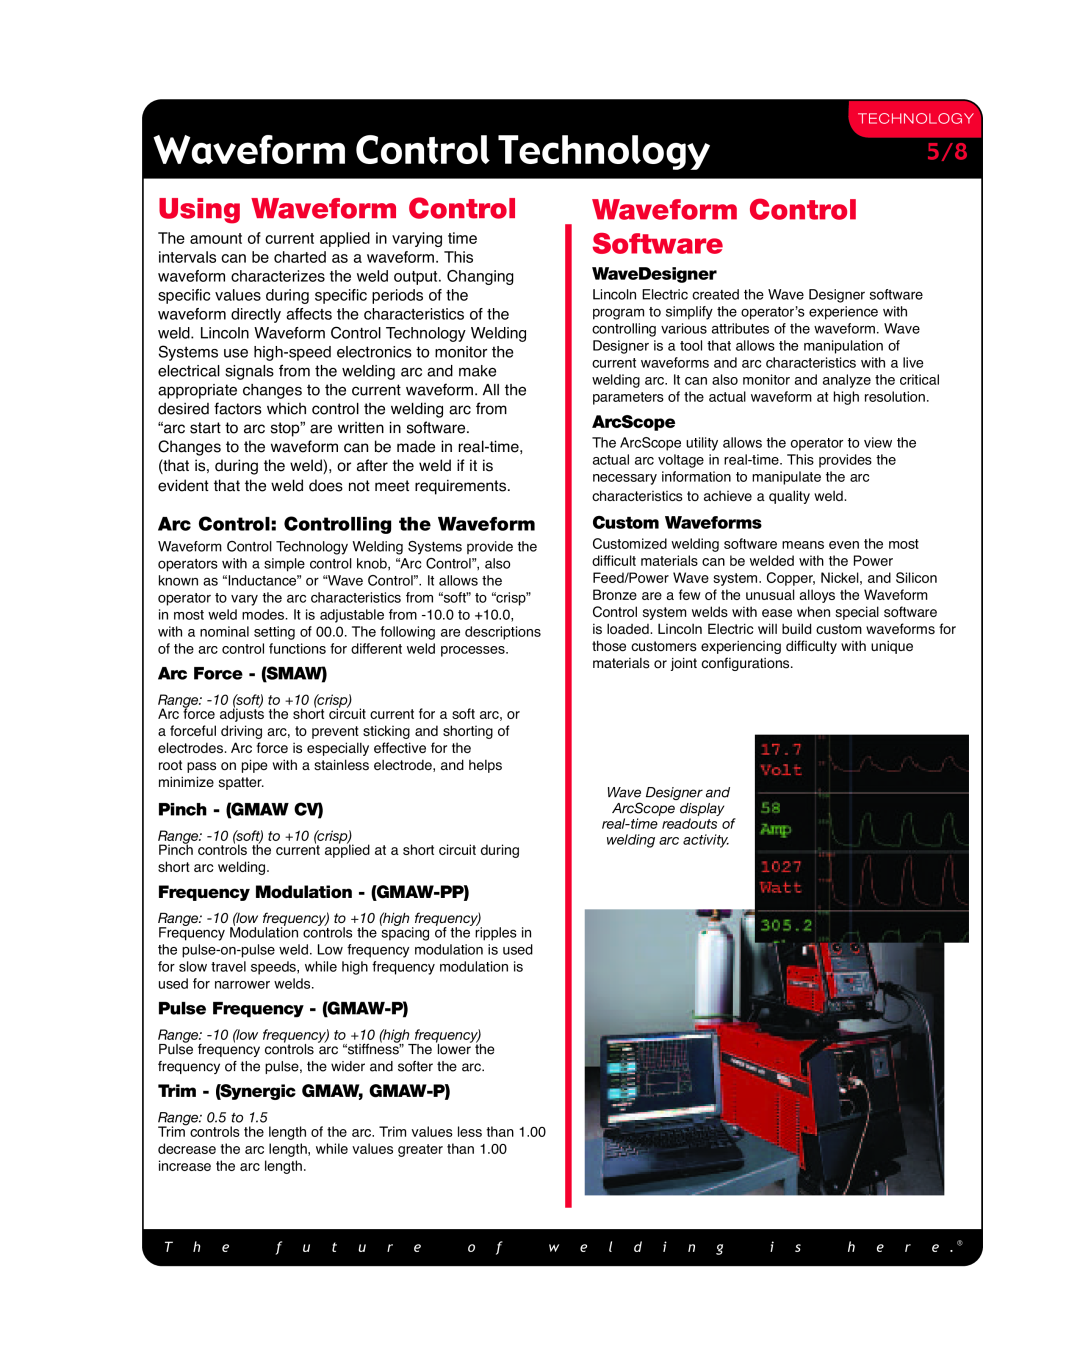 Lincoln Electric MC240 Using Waveform Control, Waveform Control Software, Arc Control Controlling the Waveform, ArcScope 